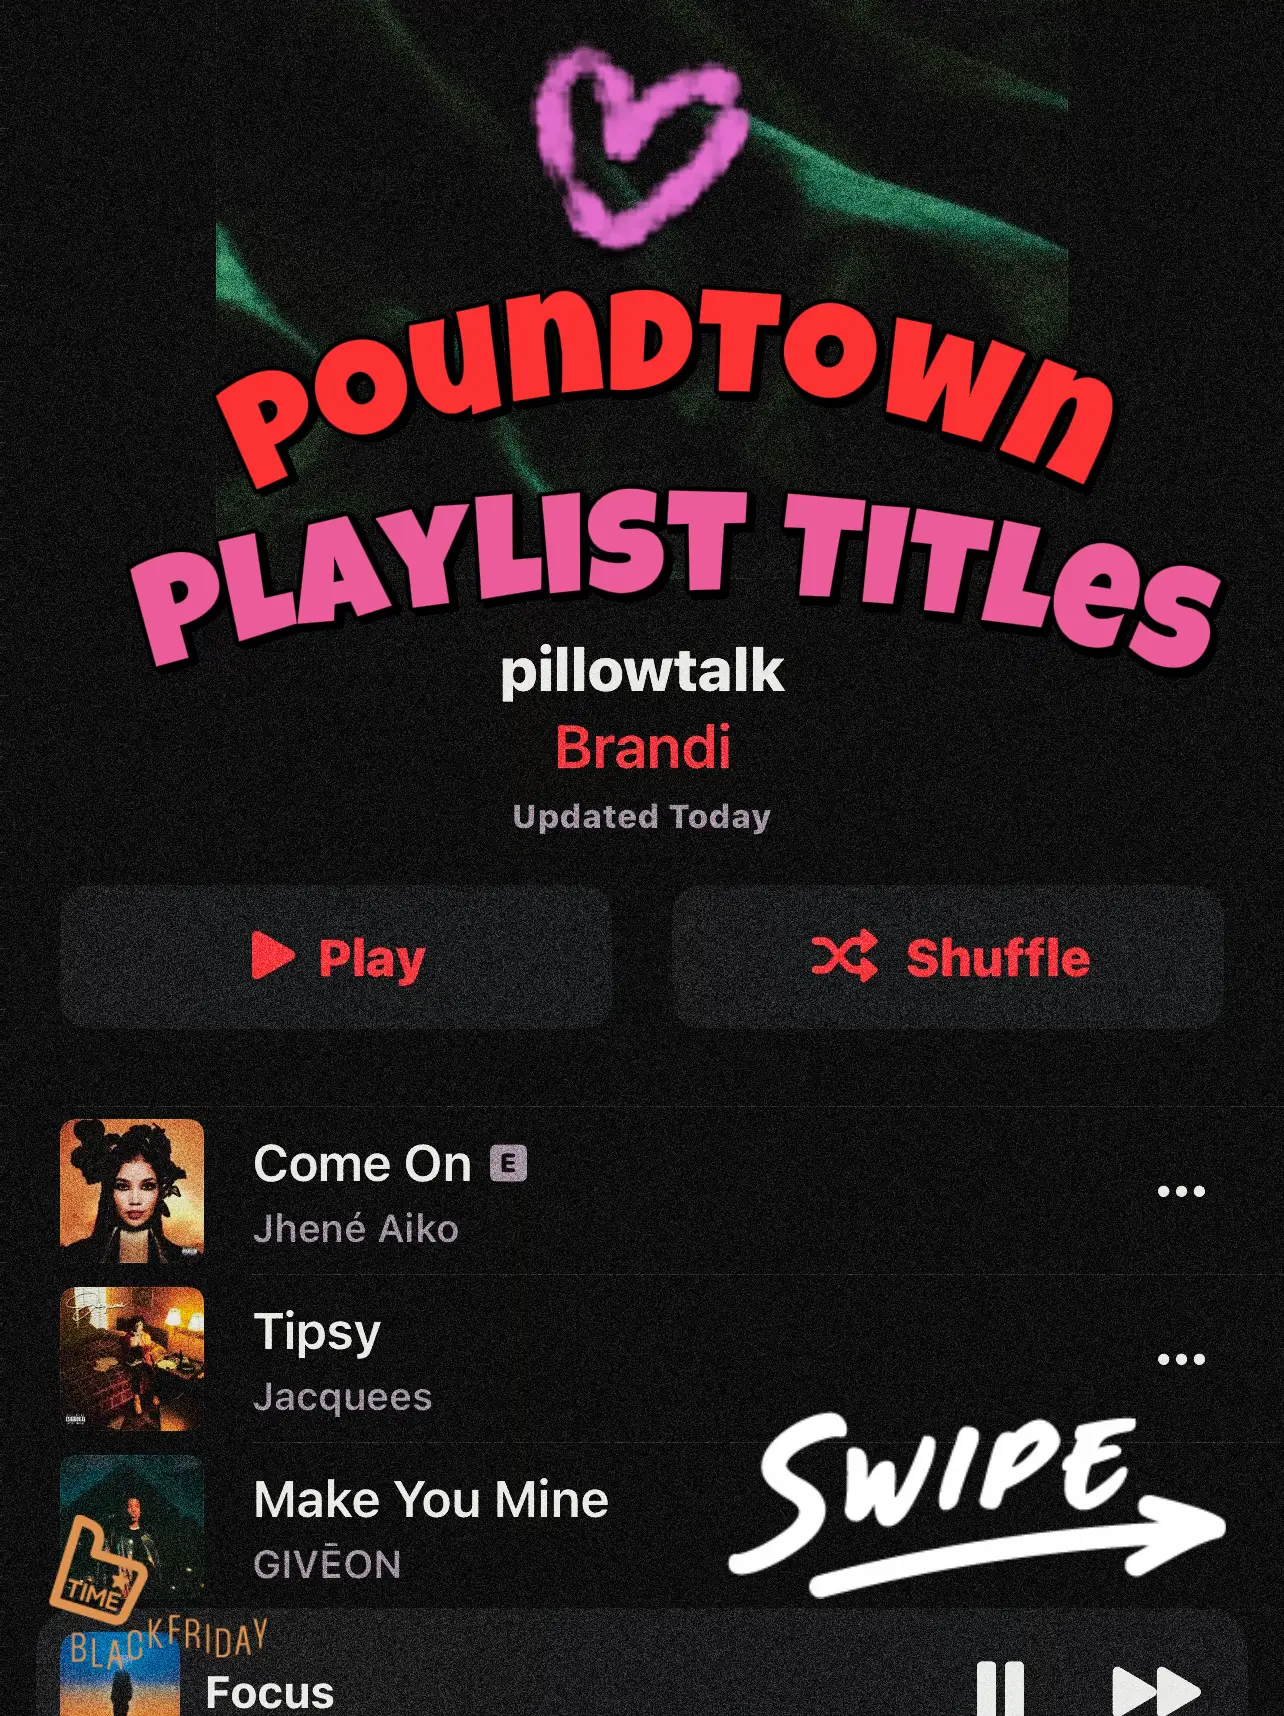 Poundtown Playlist Titles's images